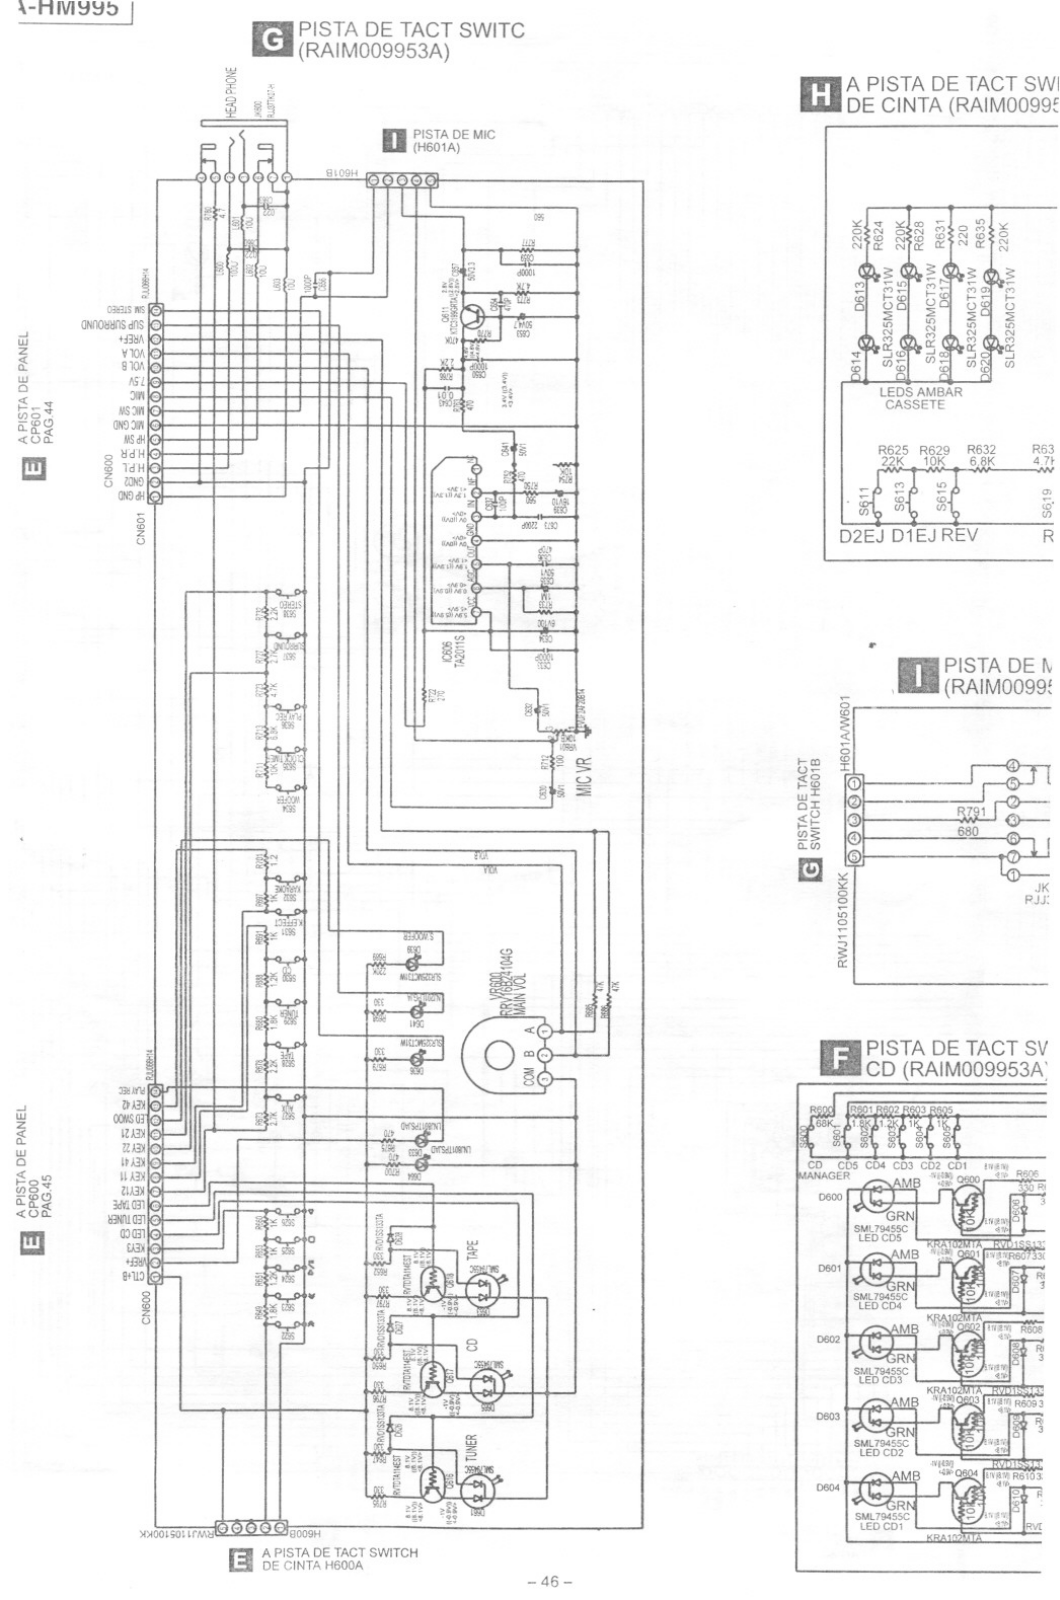 Technics SAHM-995 Schematic